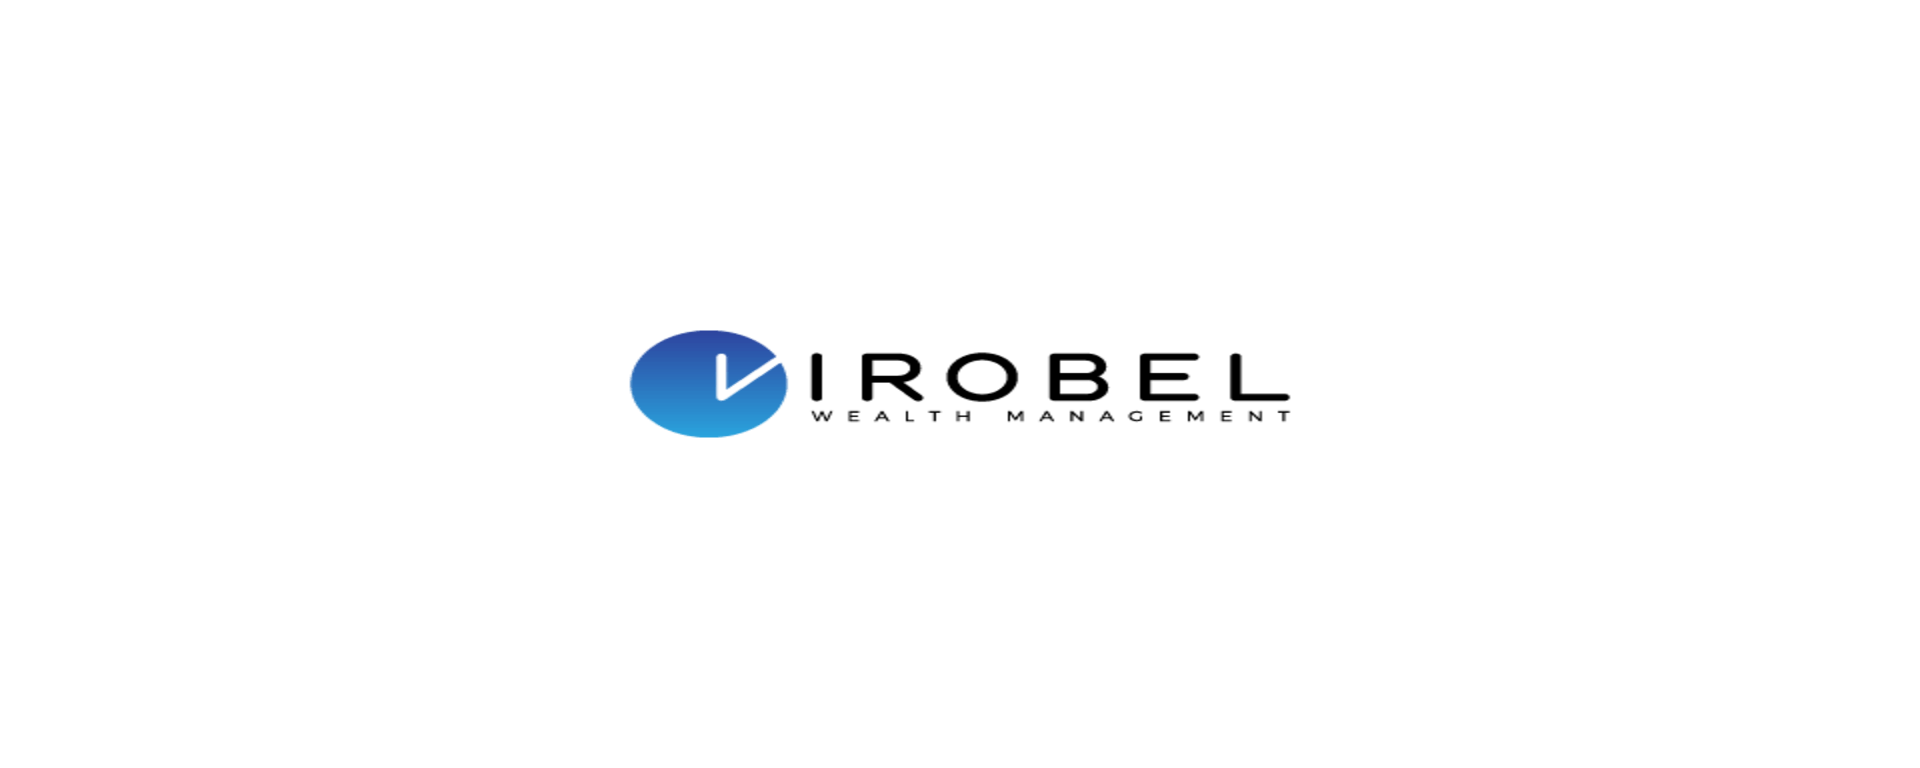 Wealth Logo - Virobel Wealth Management SA - Made In Switzerland